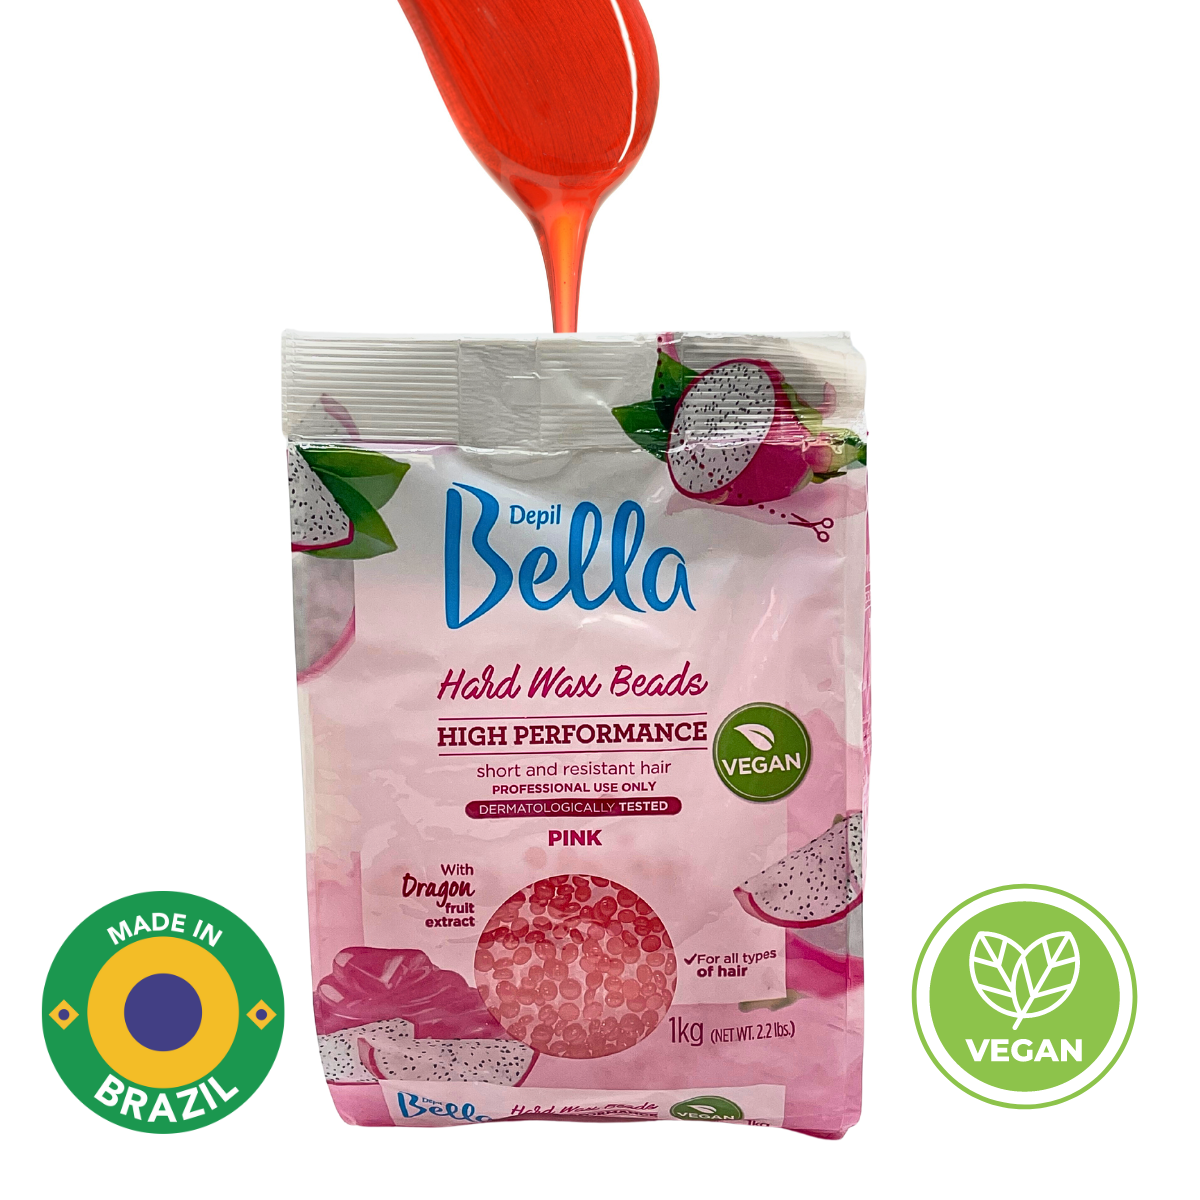 Depil Bella Pink Pitaya Confetti Hard Wax Beads - High-Performance Hair Removal | Vegan 2.2 lbs - Buy professional cosmetics dedicated to hair removal